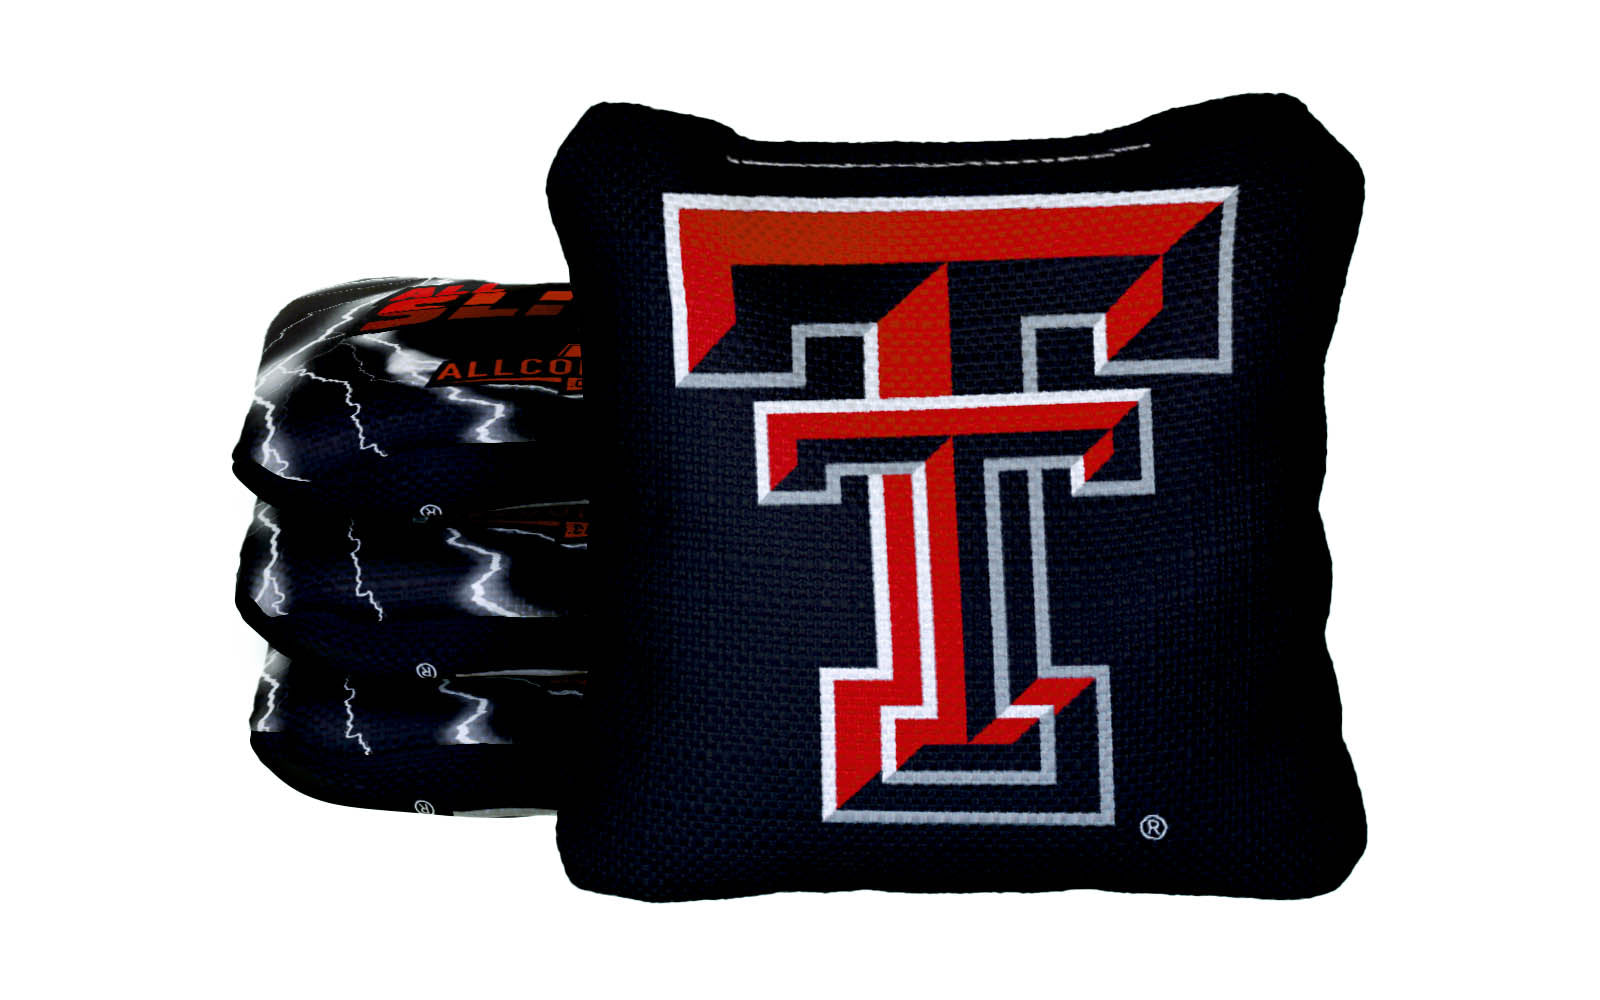 Officially Licensed Collegiate Cornhole Bags - AllCornhole All-Slide 2.0 - Set of 4 - Texas Tech